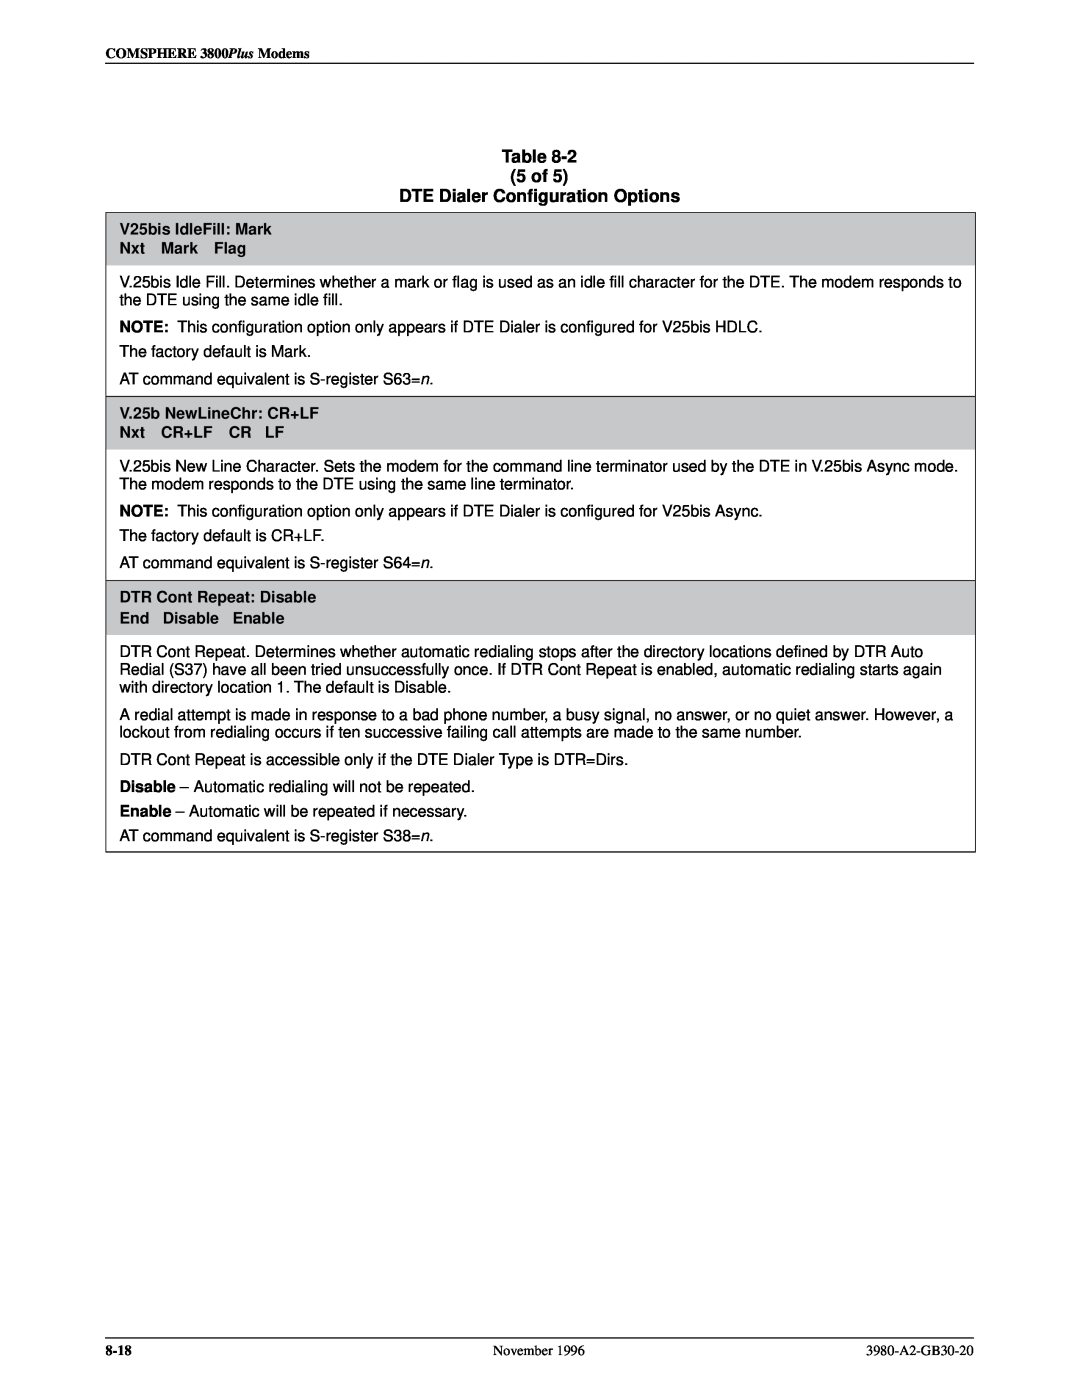 Paradyne 3800PLUS manual of DTE Dialer Configuration Options, V25bis IdleFill Mark Nxt Mark Flag 